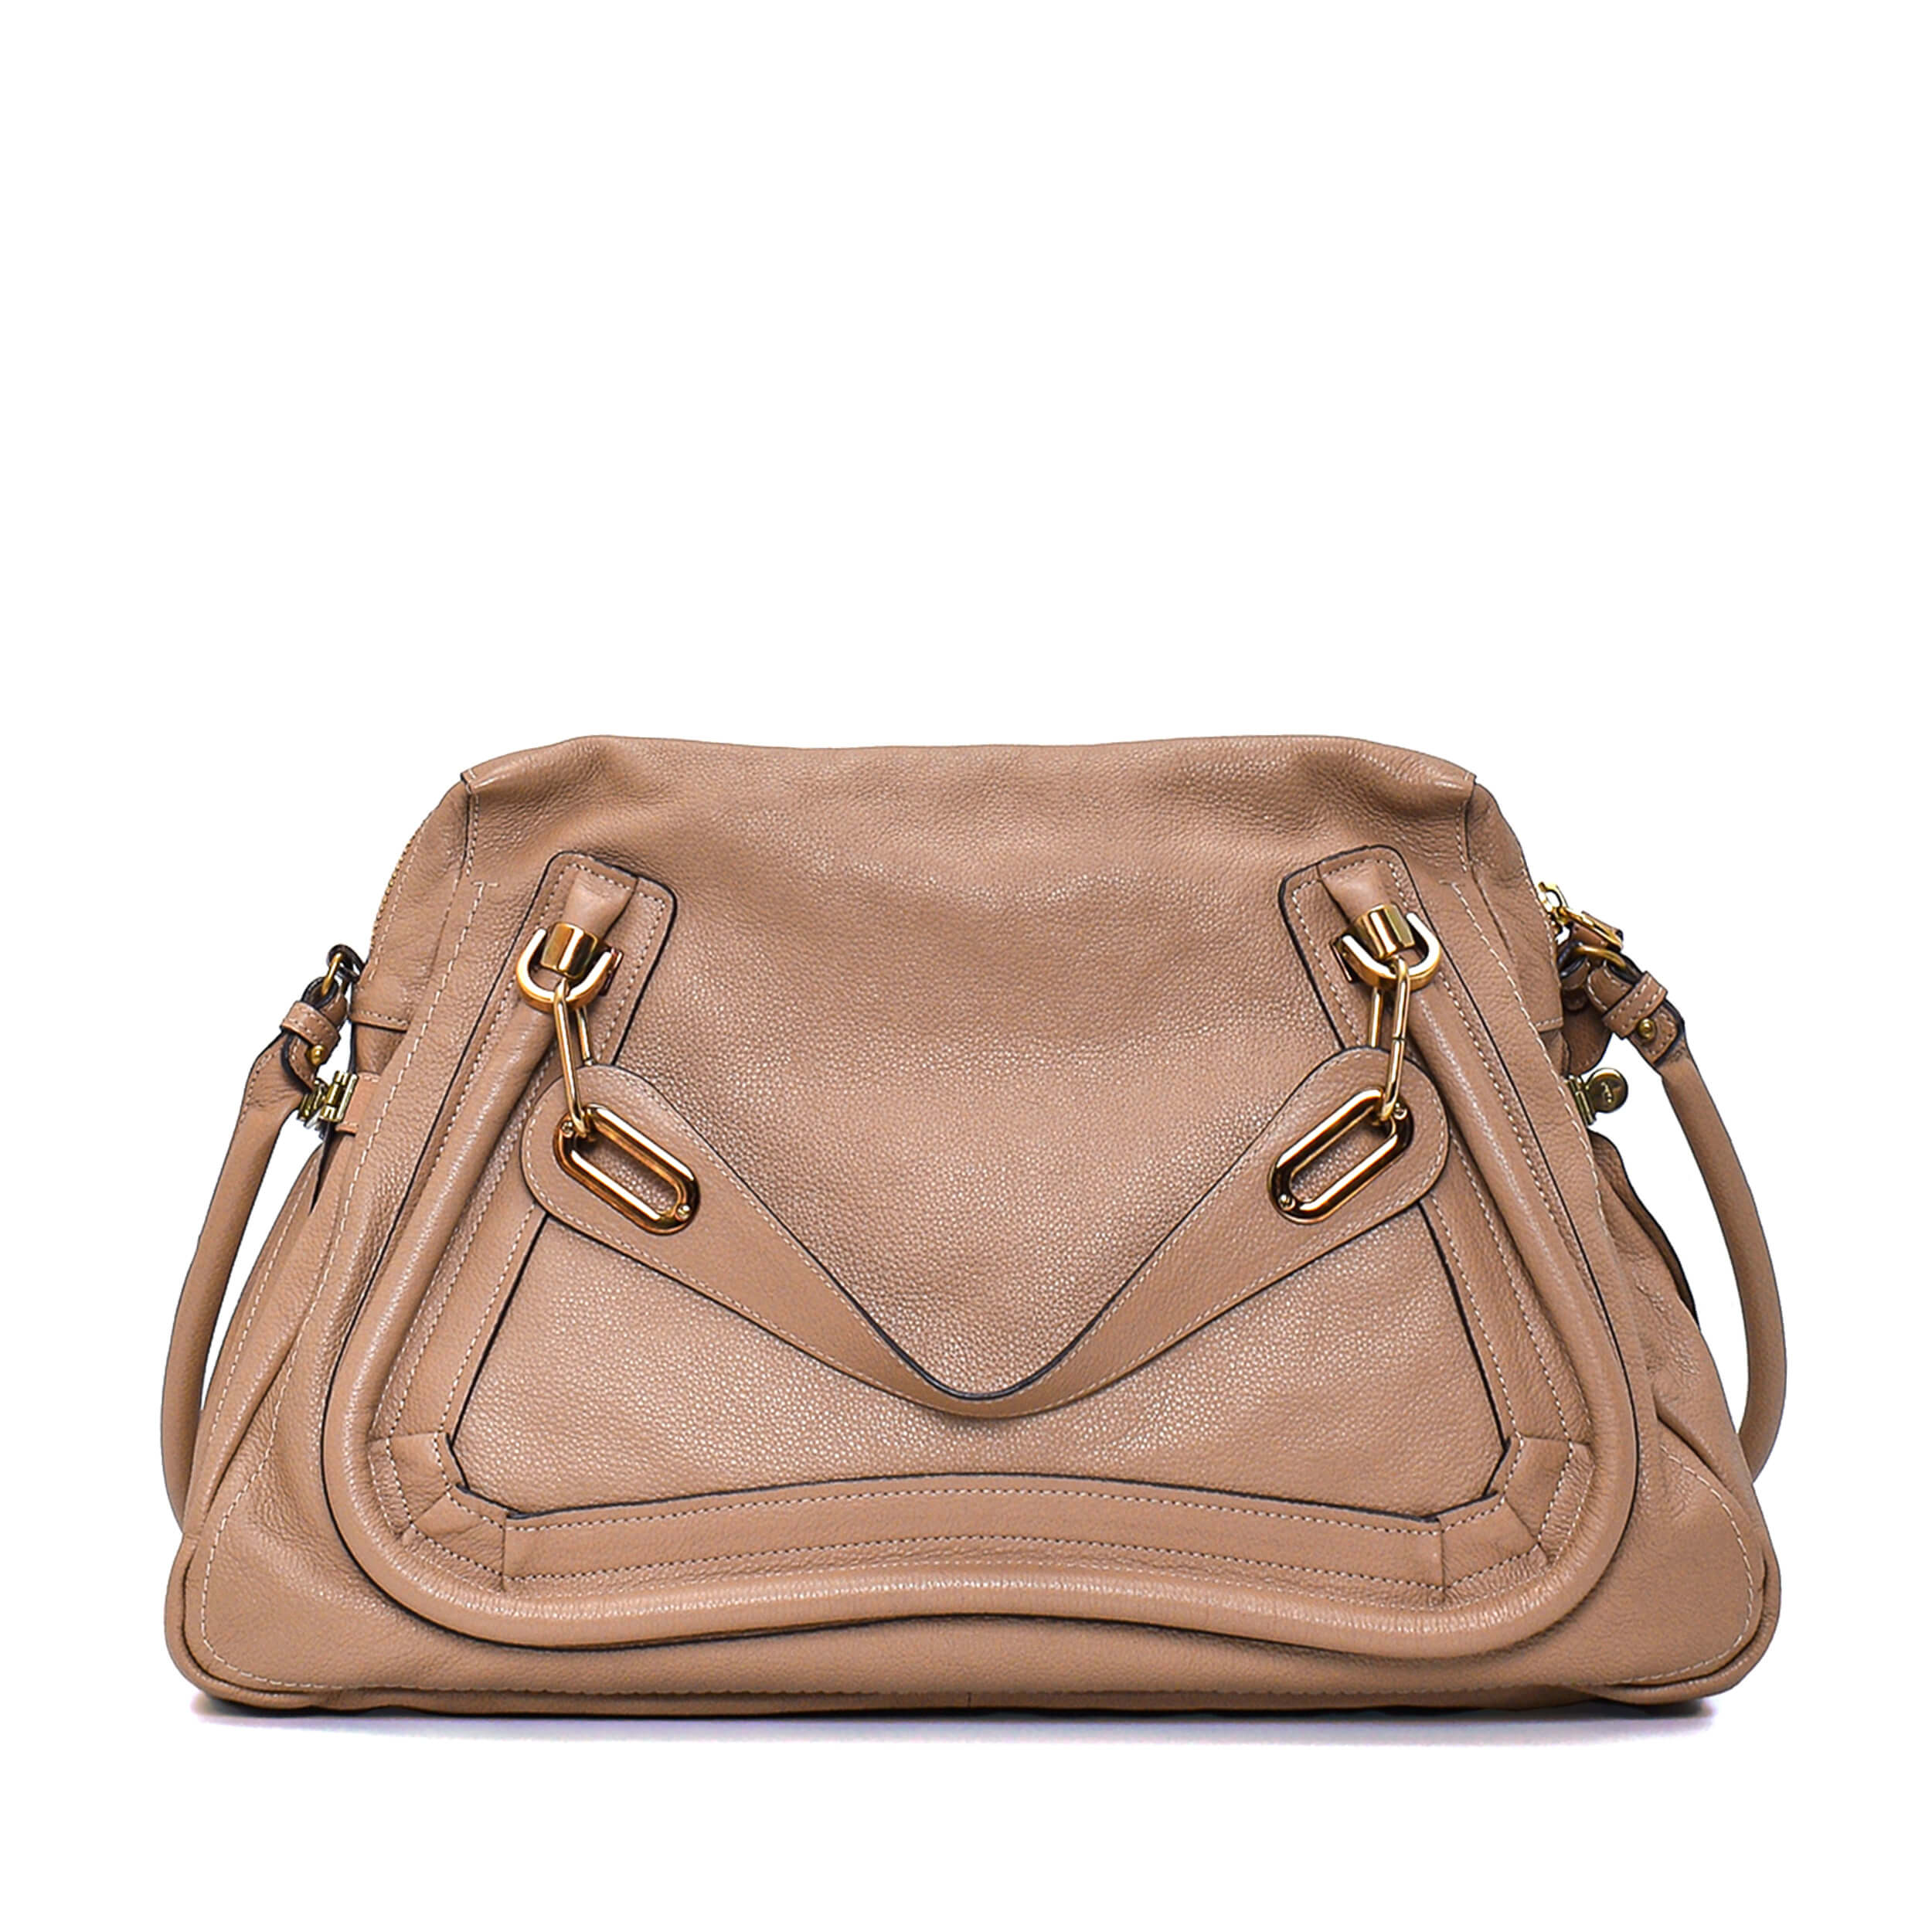 Chloe - Beige Paraty Leather Satchel Bag